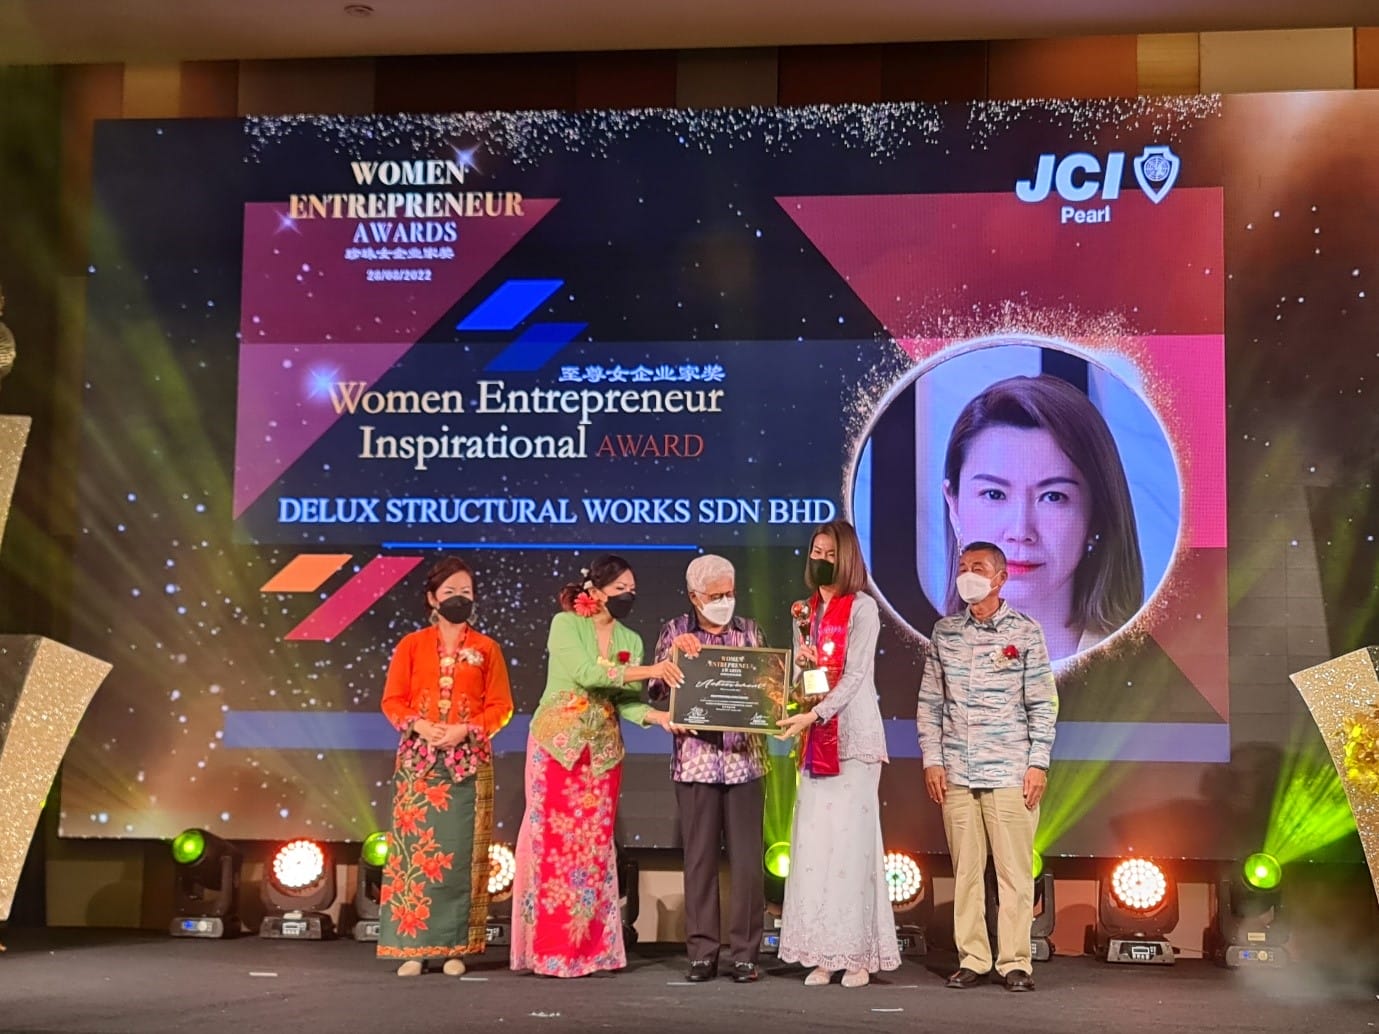 JCI Pearl Women Entrepreneur Award, Delux